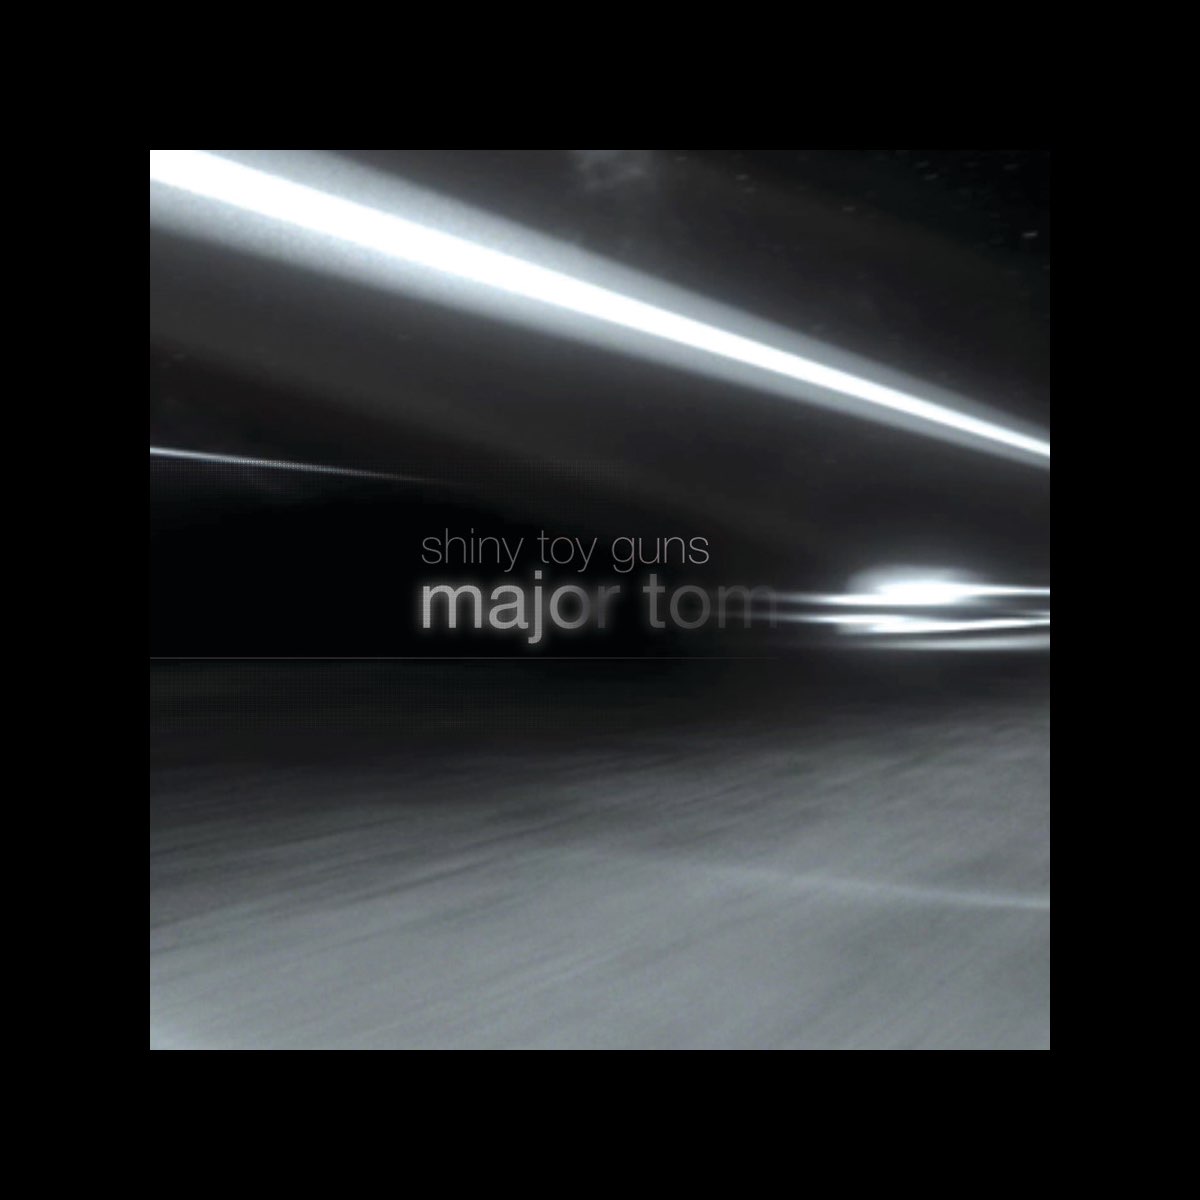 Major Tom - Single - Album by Shiny Toy Guns - Apple Music